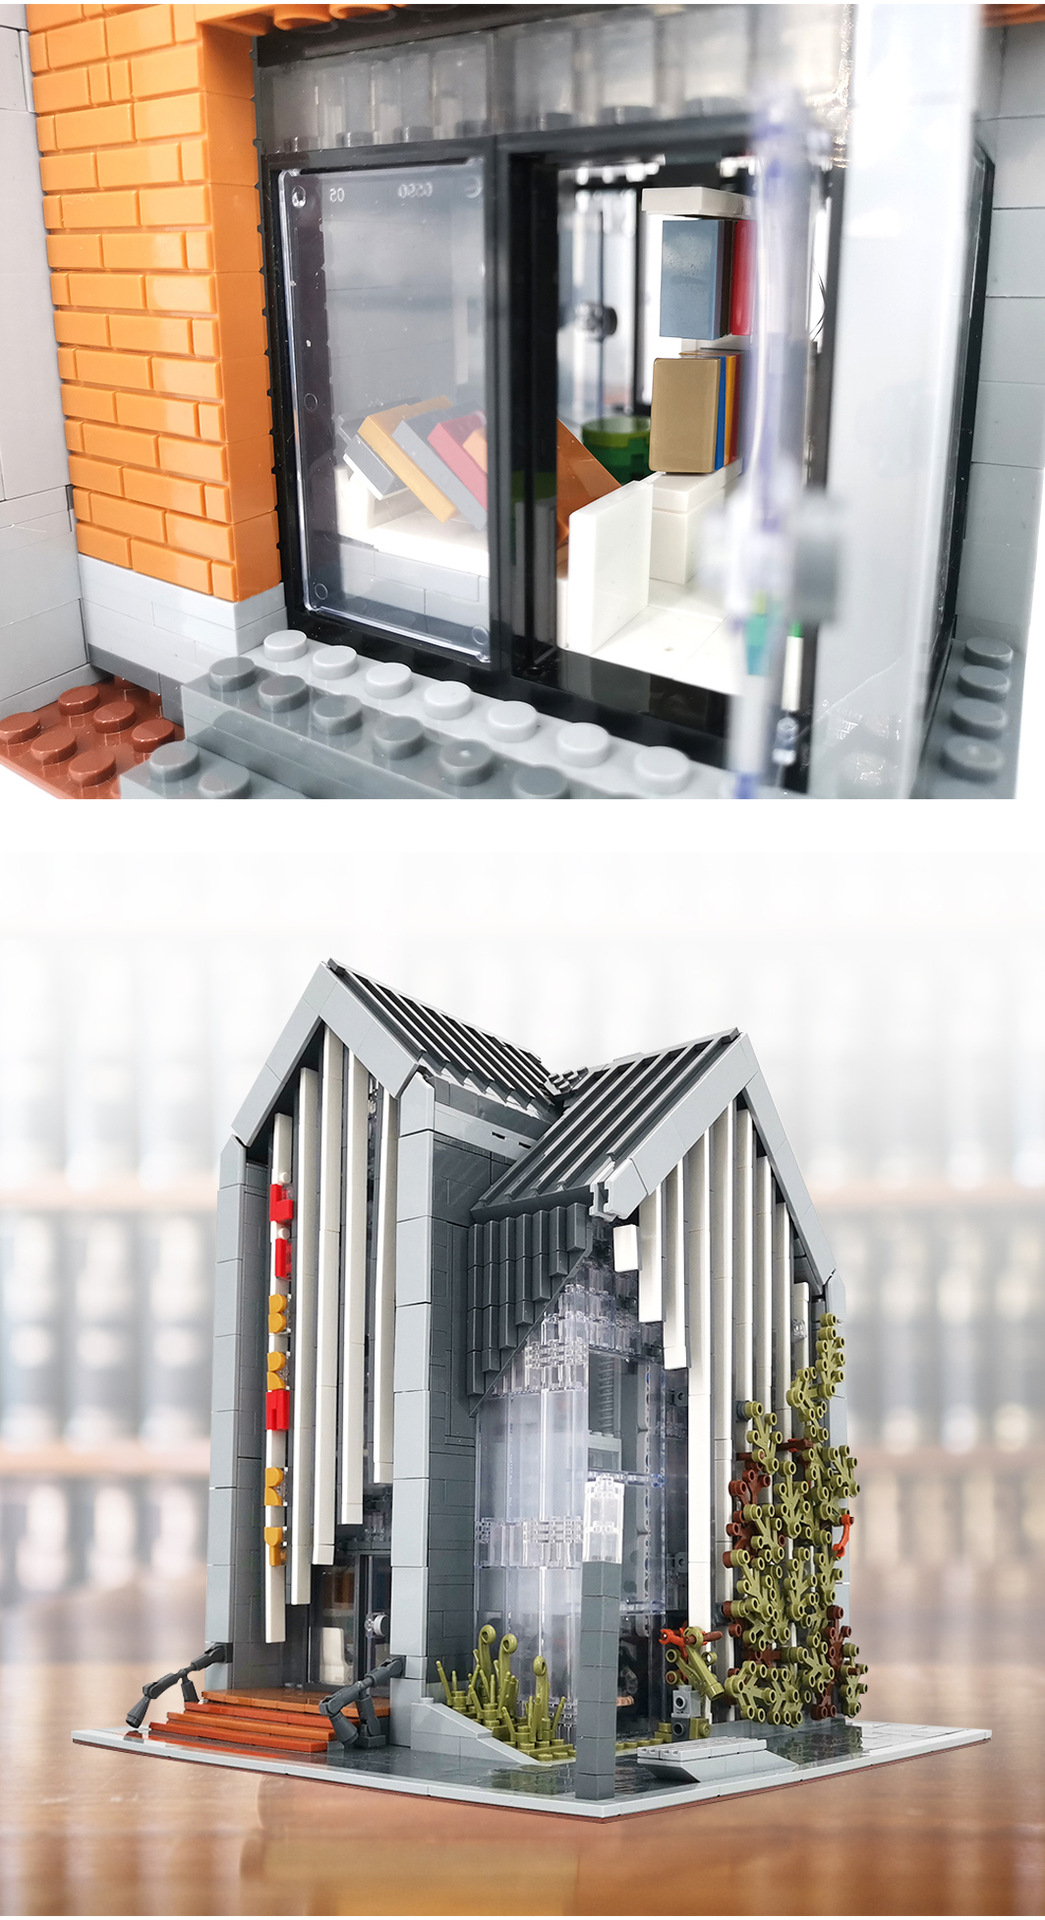 MORK 011001 Modern Library Model Building Bricks Toy Set